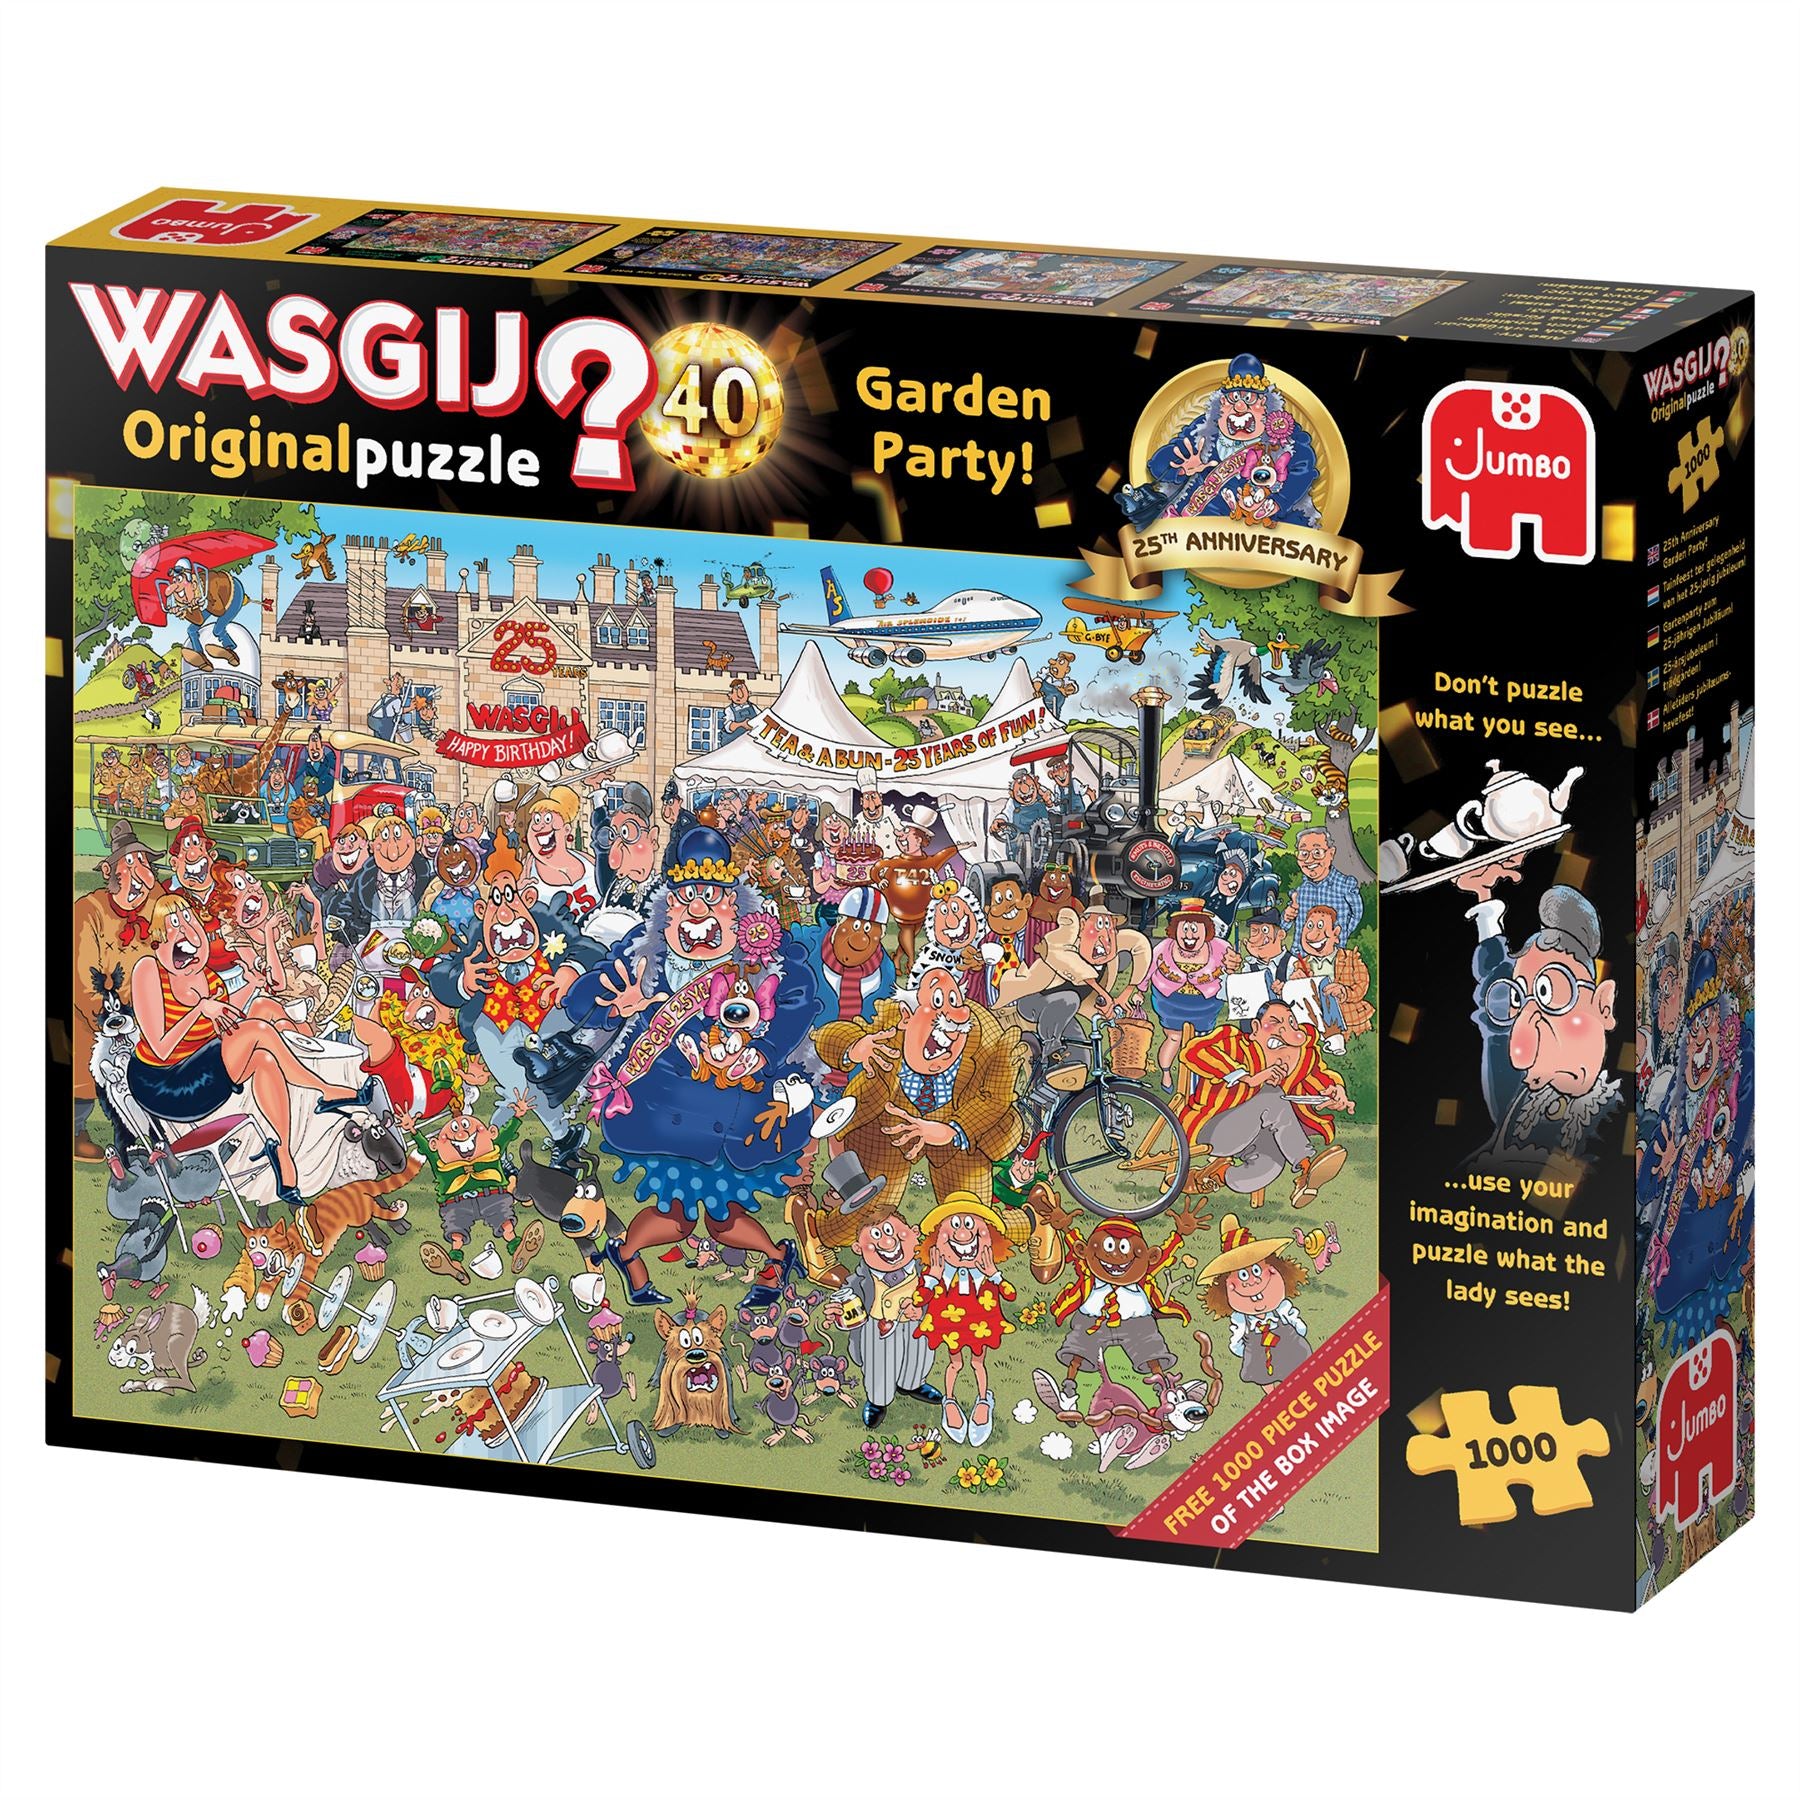 Wasgij Original 40 Garden Party 1000 Piece Jigsaw puzzle box 2